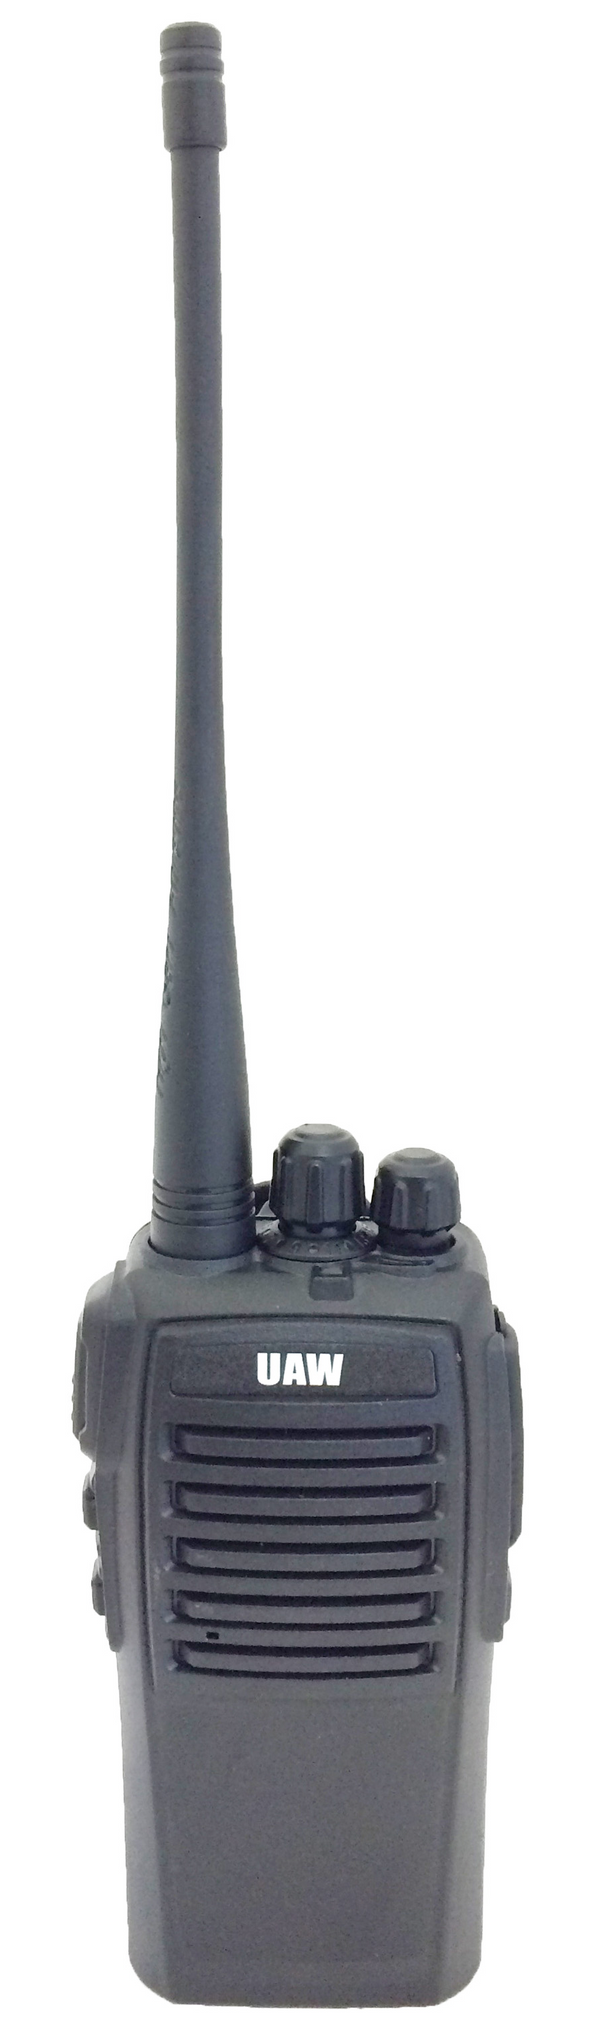 UA900 UHF Commercial Programmable Narrowband Radio with Li-ion Battery